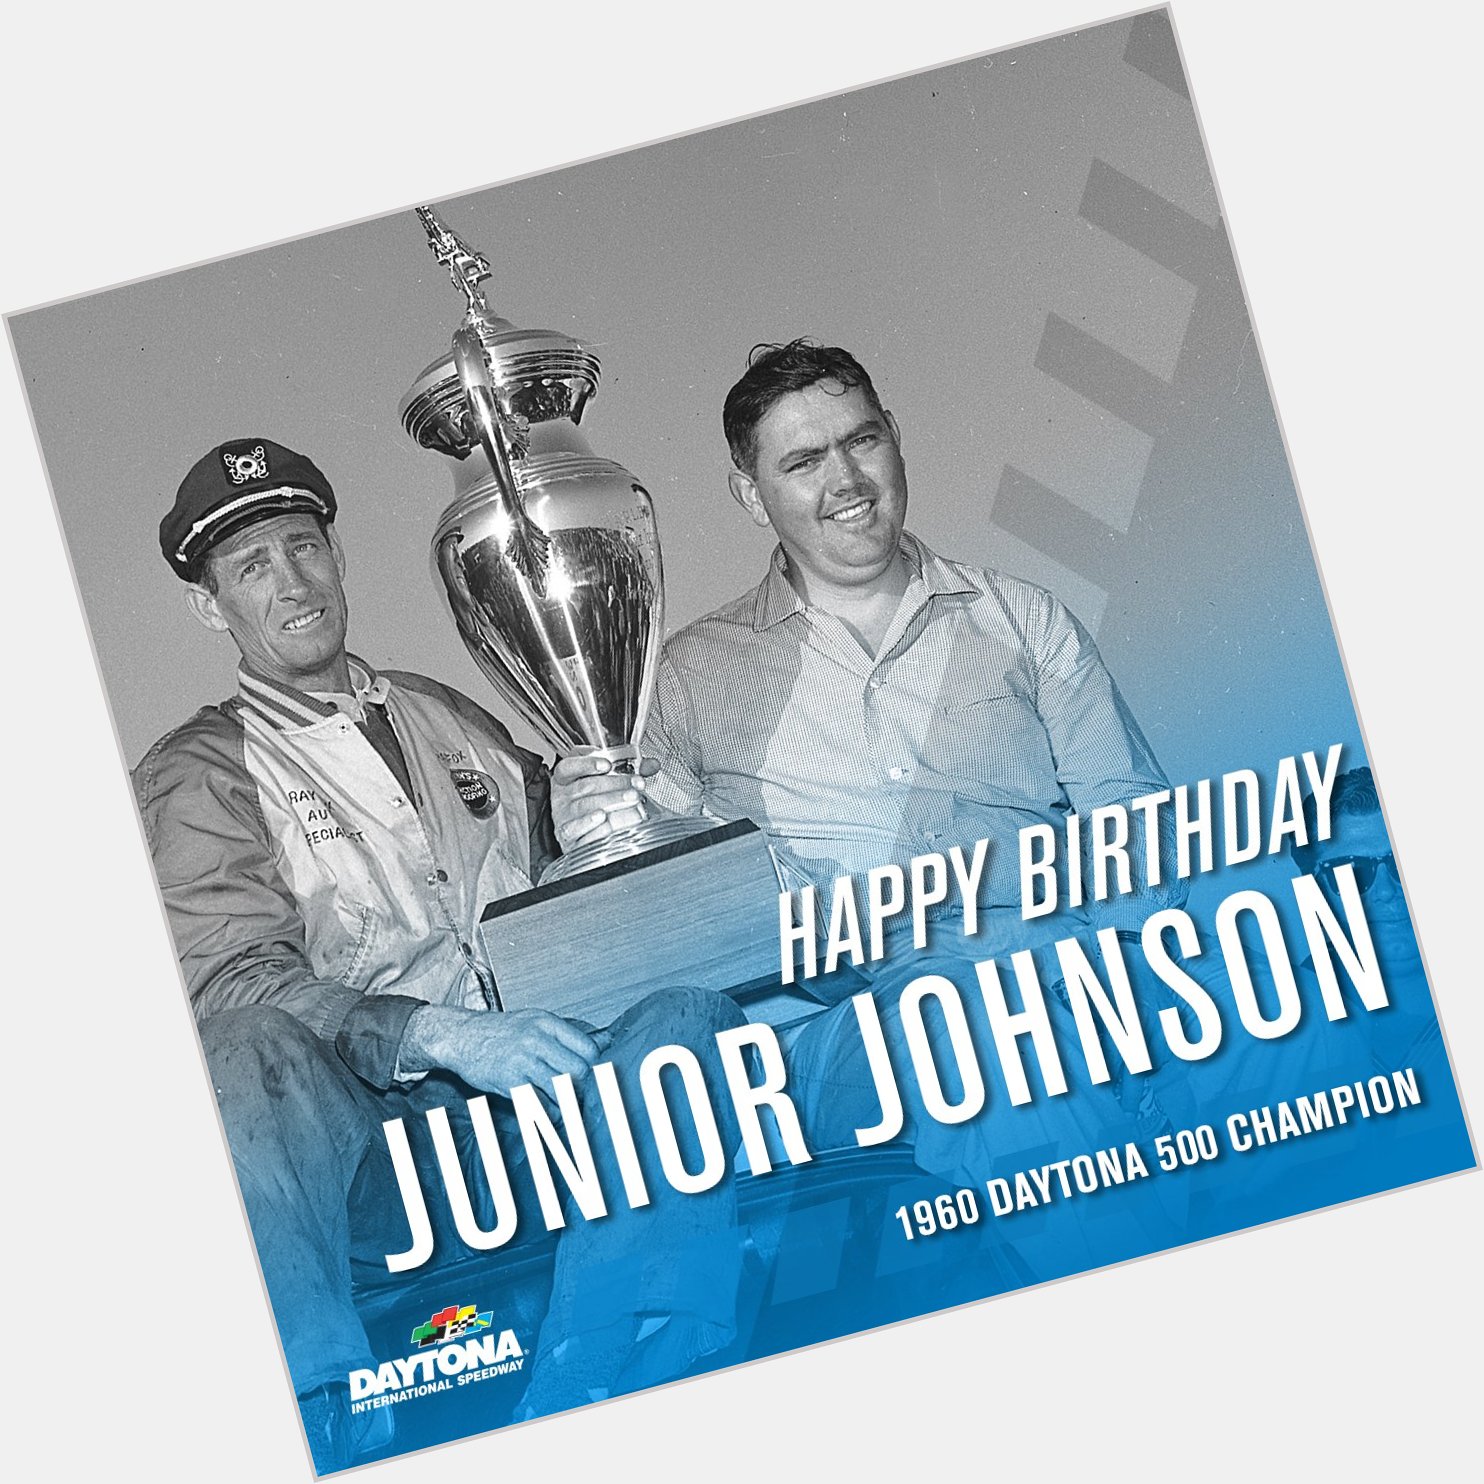 Happy birthday to the 1960 Champion Junior Johnson! 